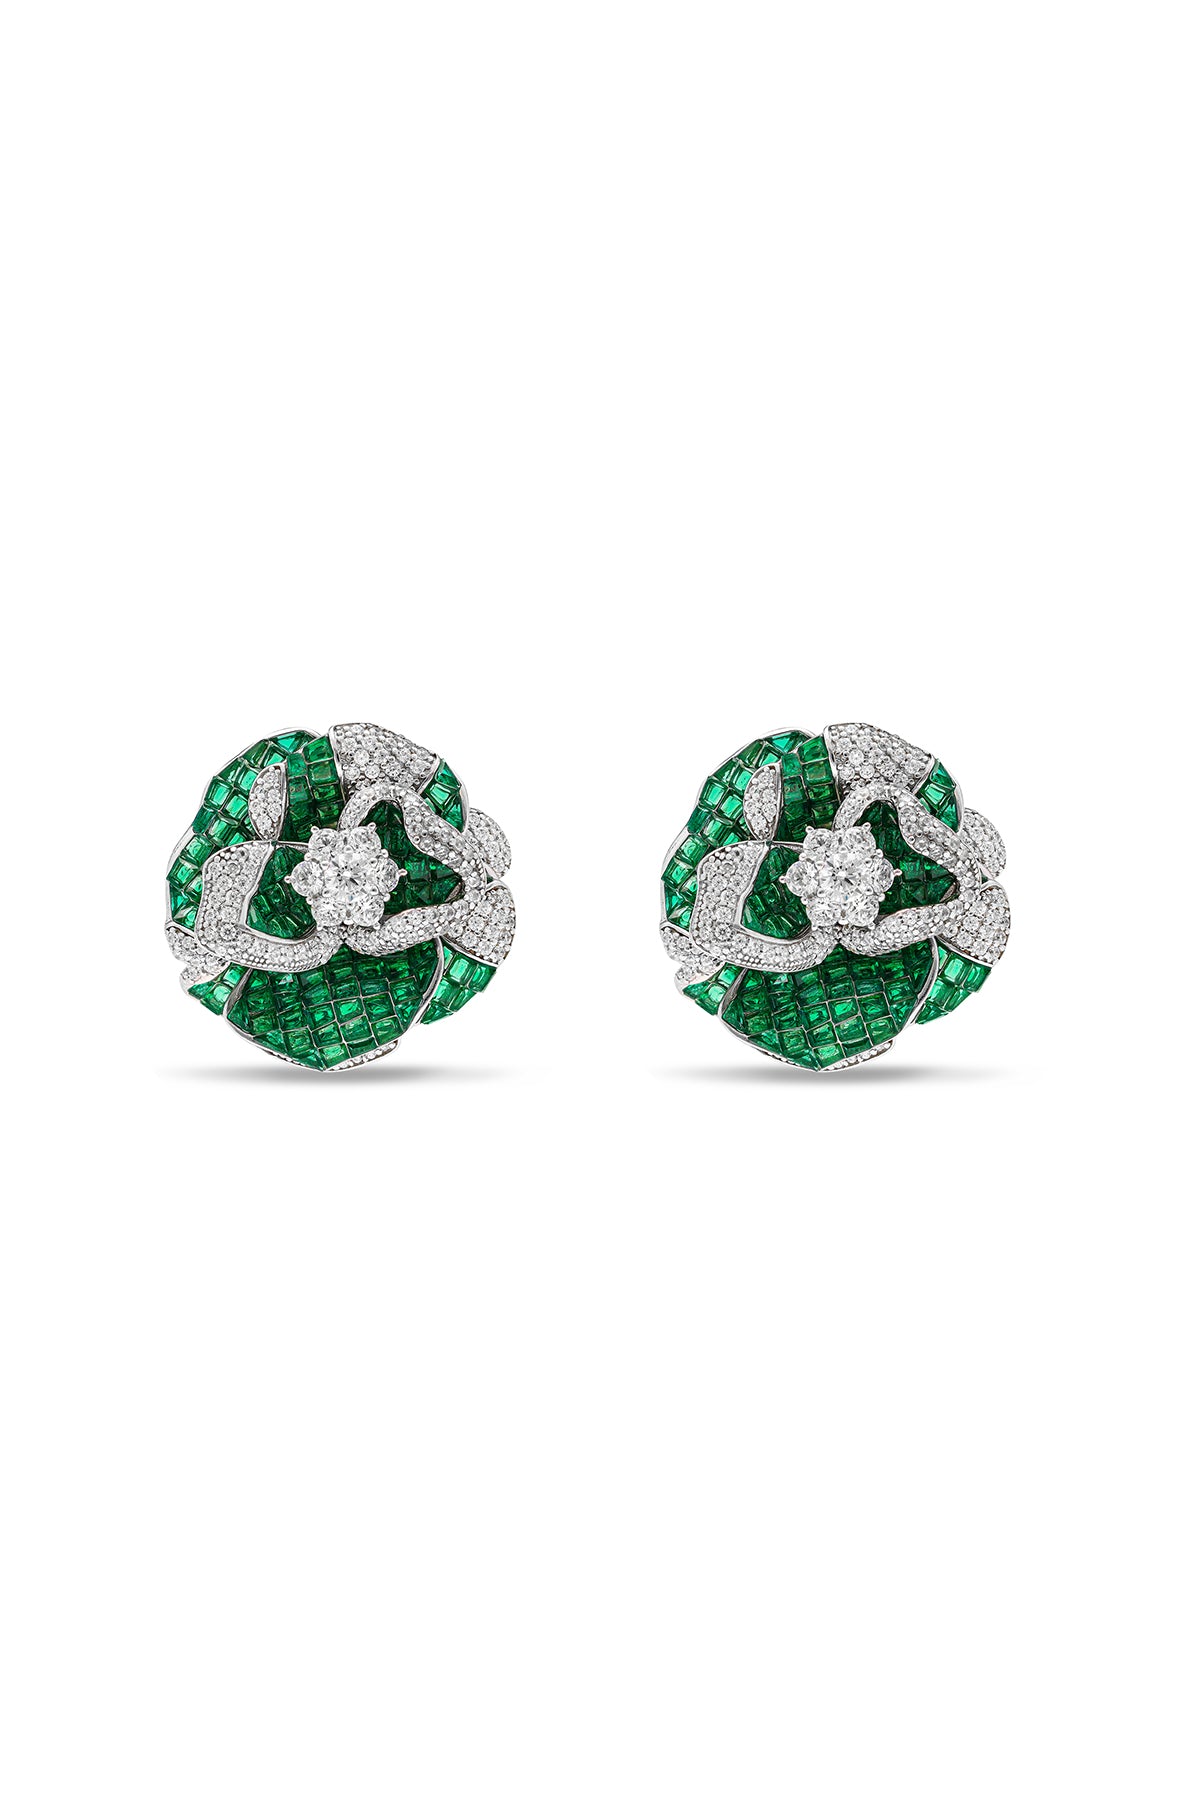 Wildflower Emerald Green Whispers Stud Earrings